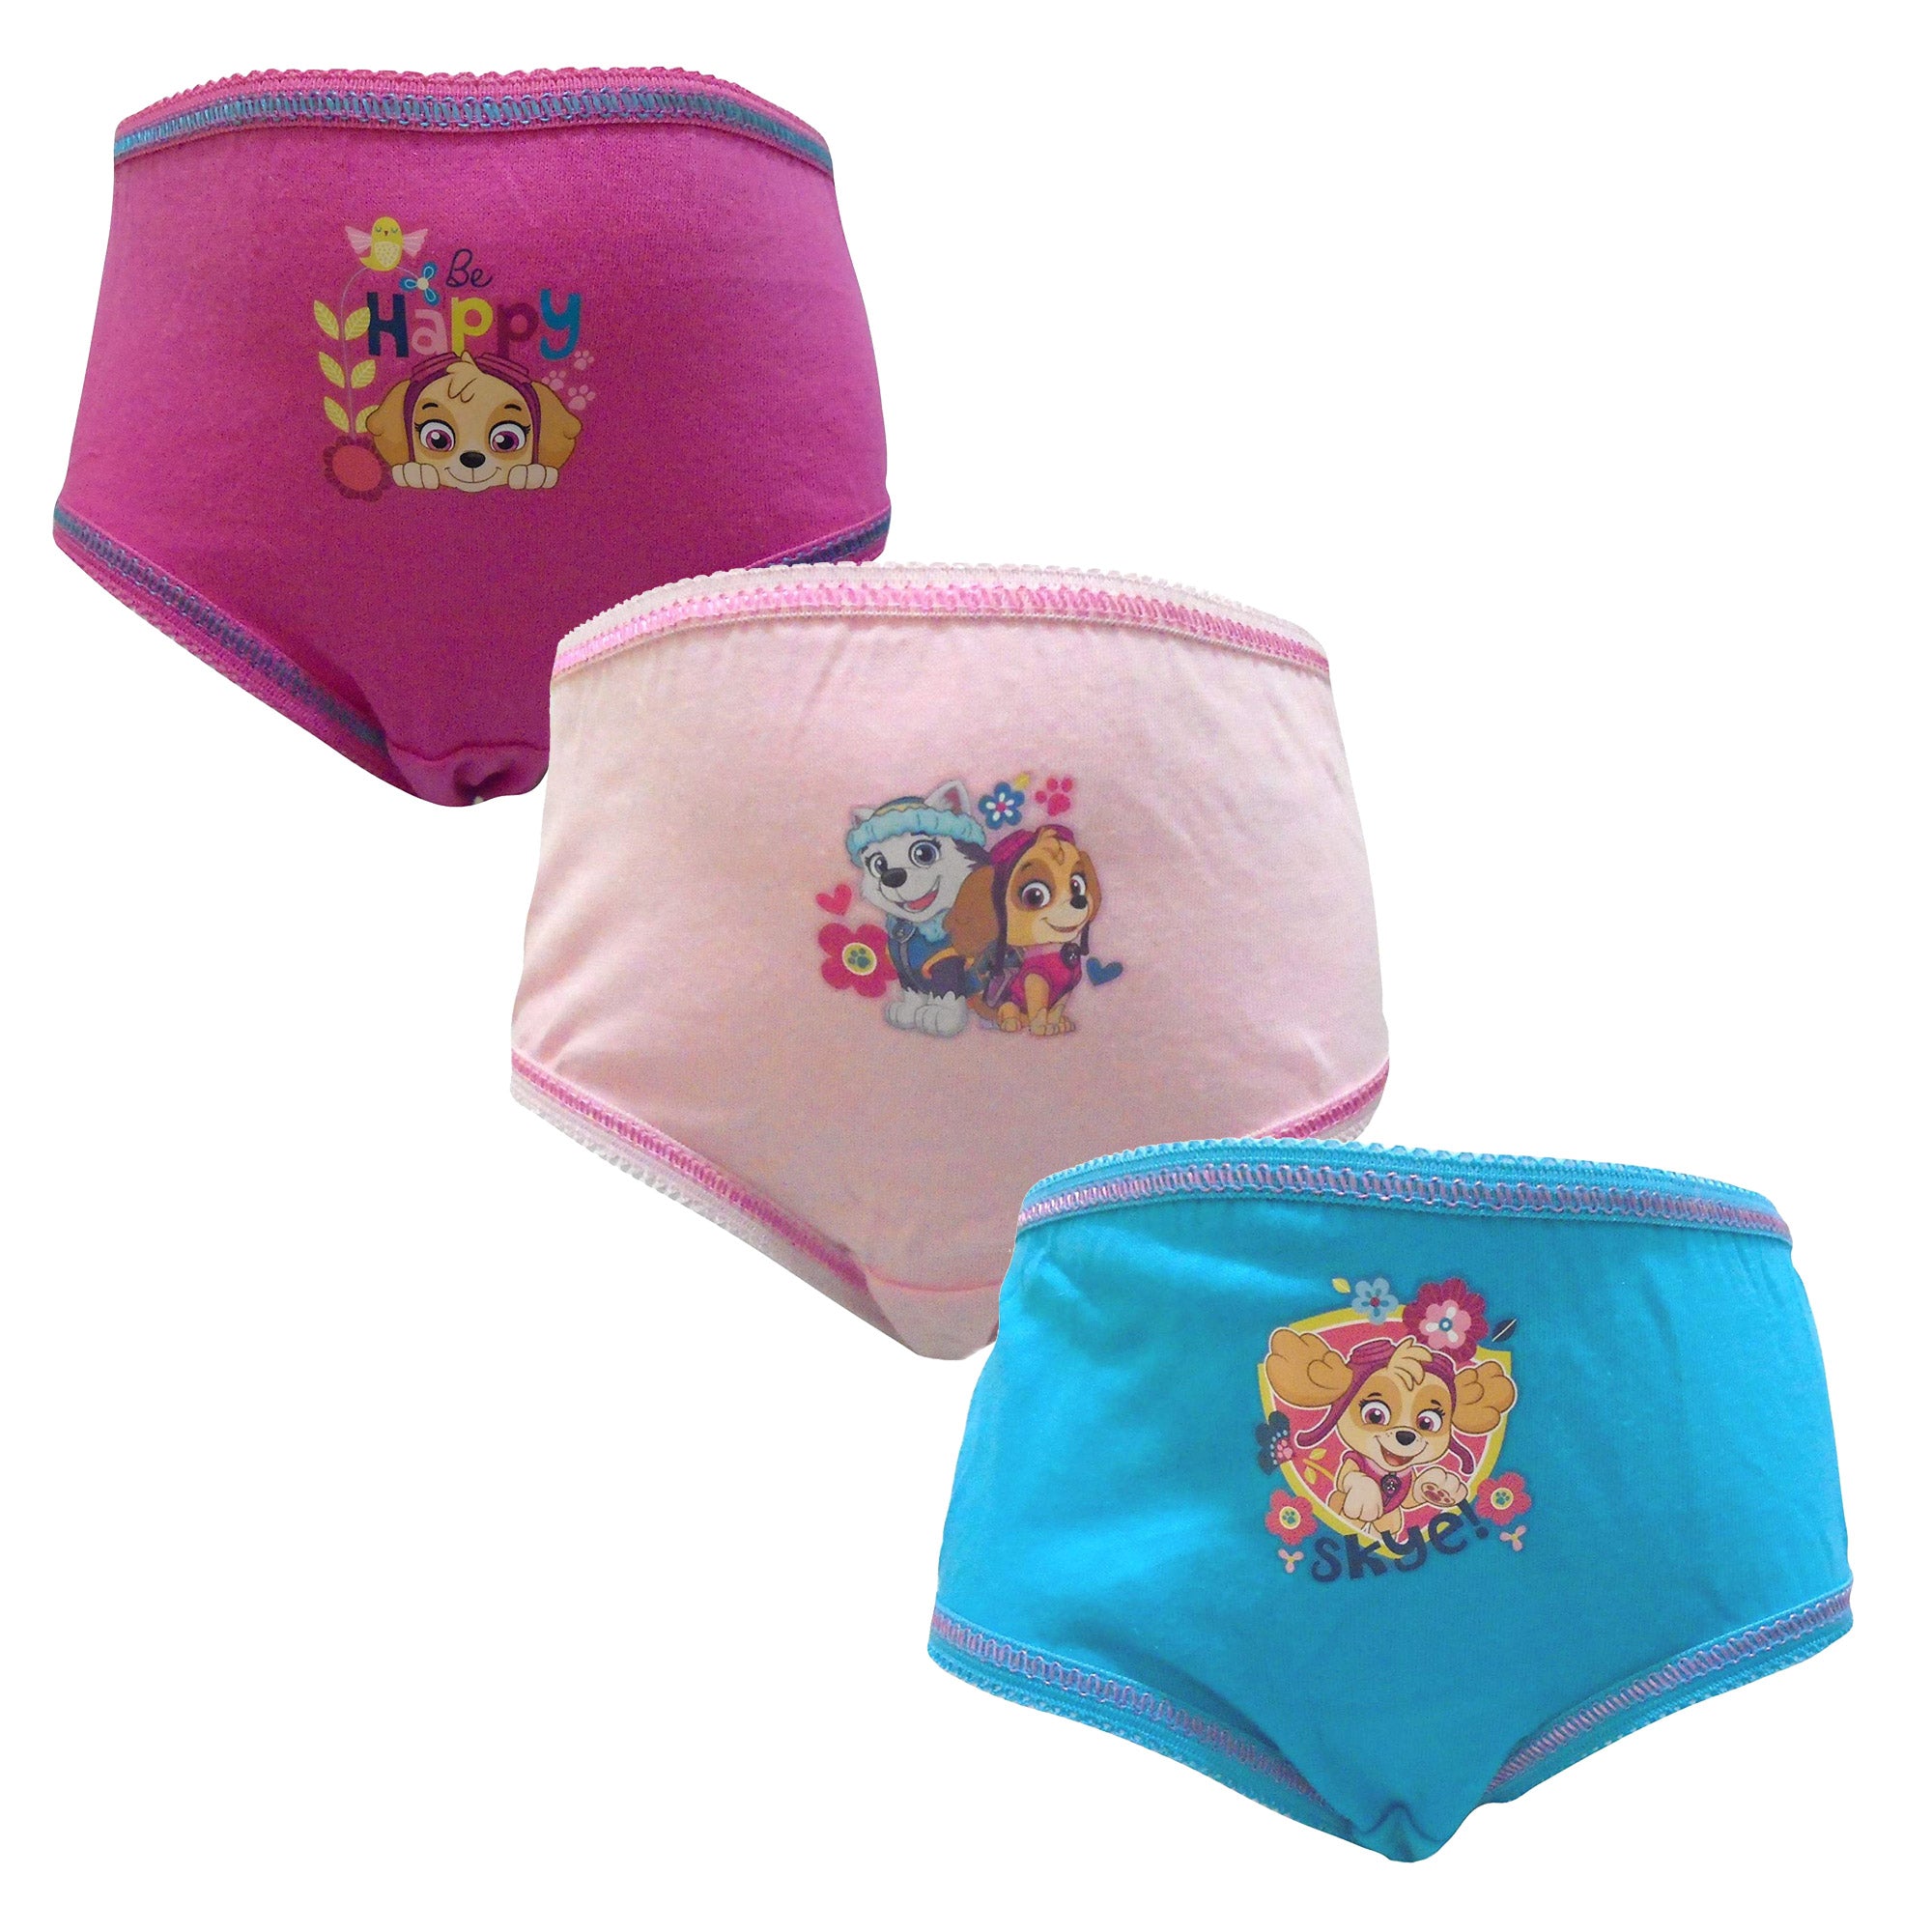 Paw Patrol Skye Girls Knickers 3 Pack Underwear 18 months to 5